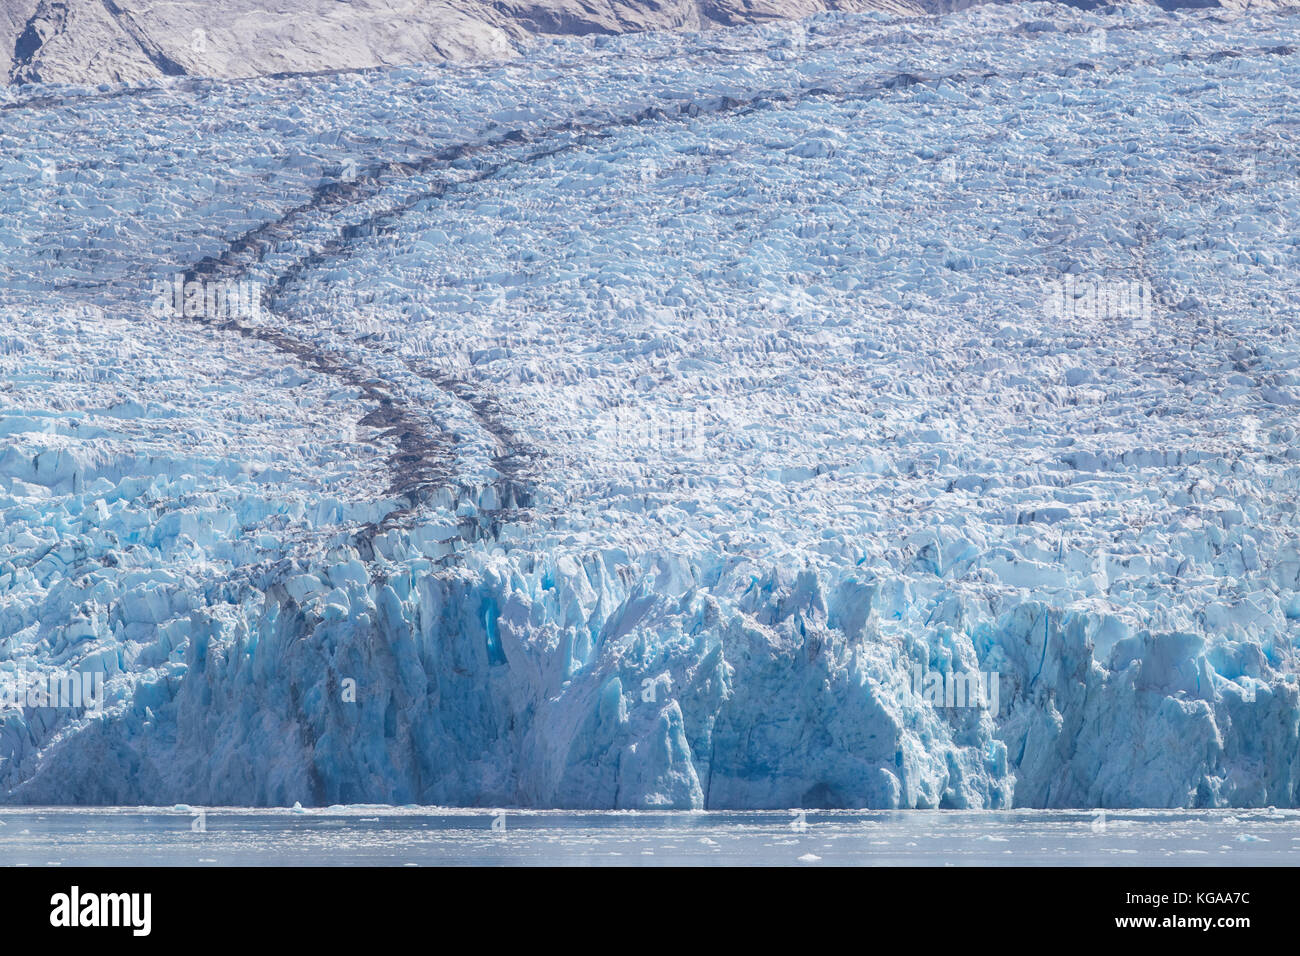 Glacier showing medial moraine, Alaska Stock Photo